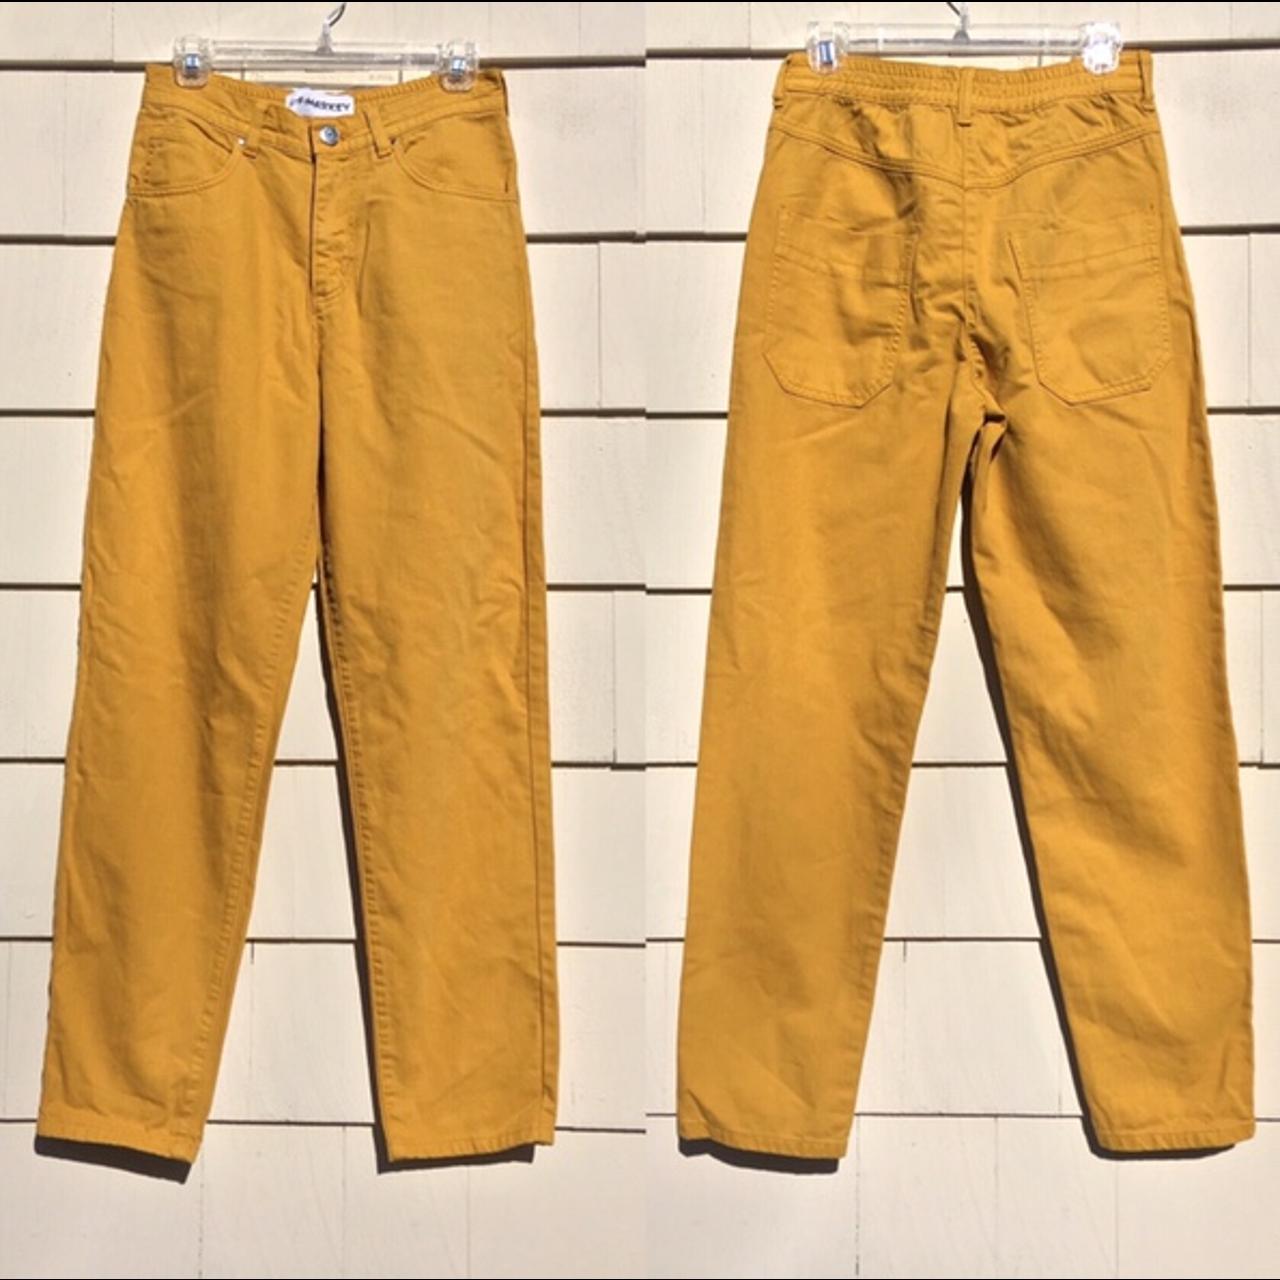 New L.F. Markey mustard yellow Johnny jeans. The... - Depop